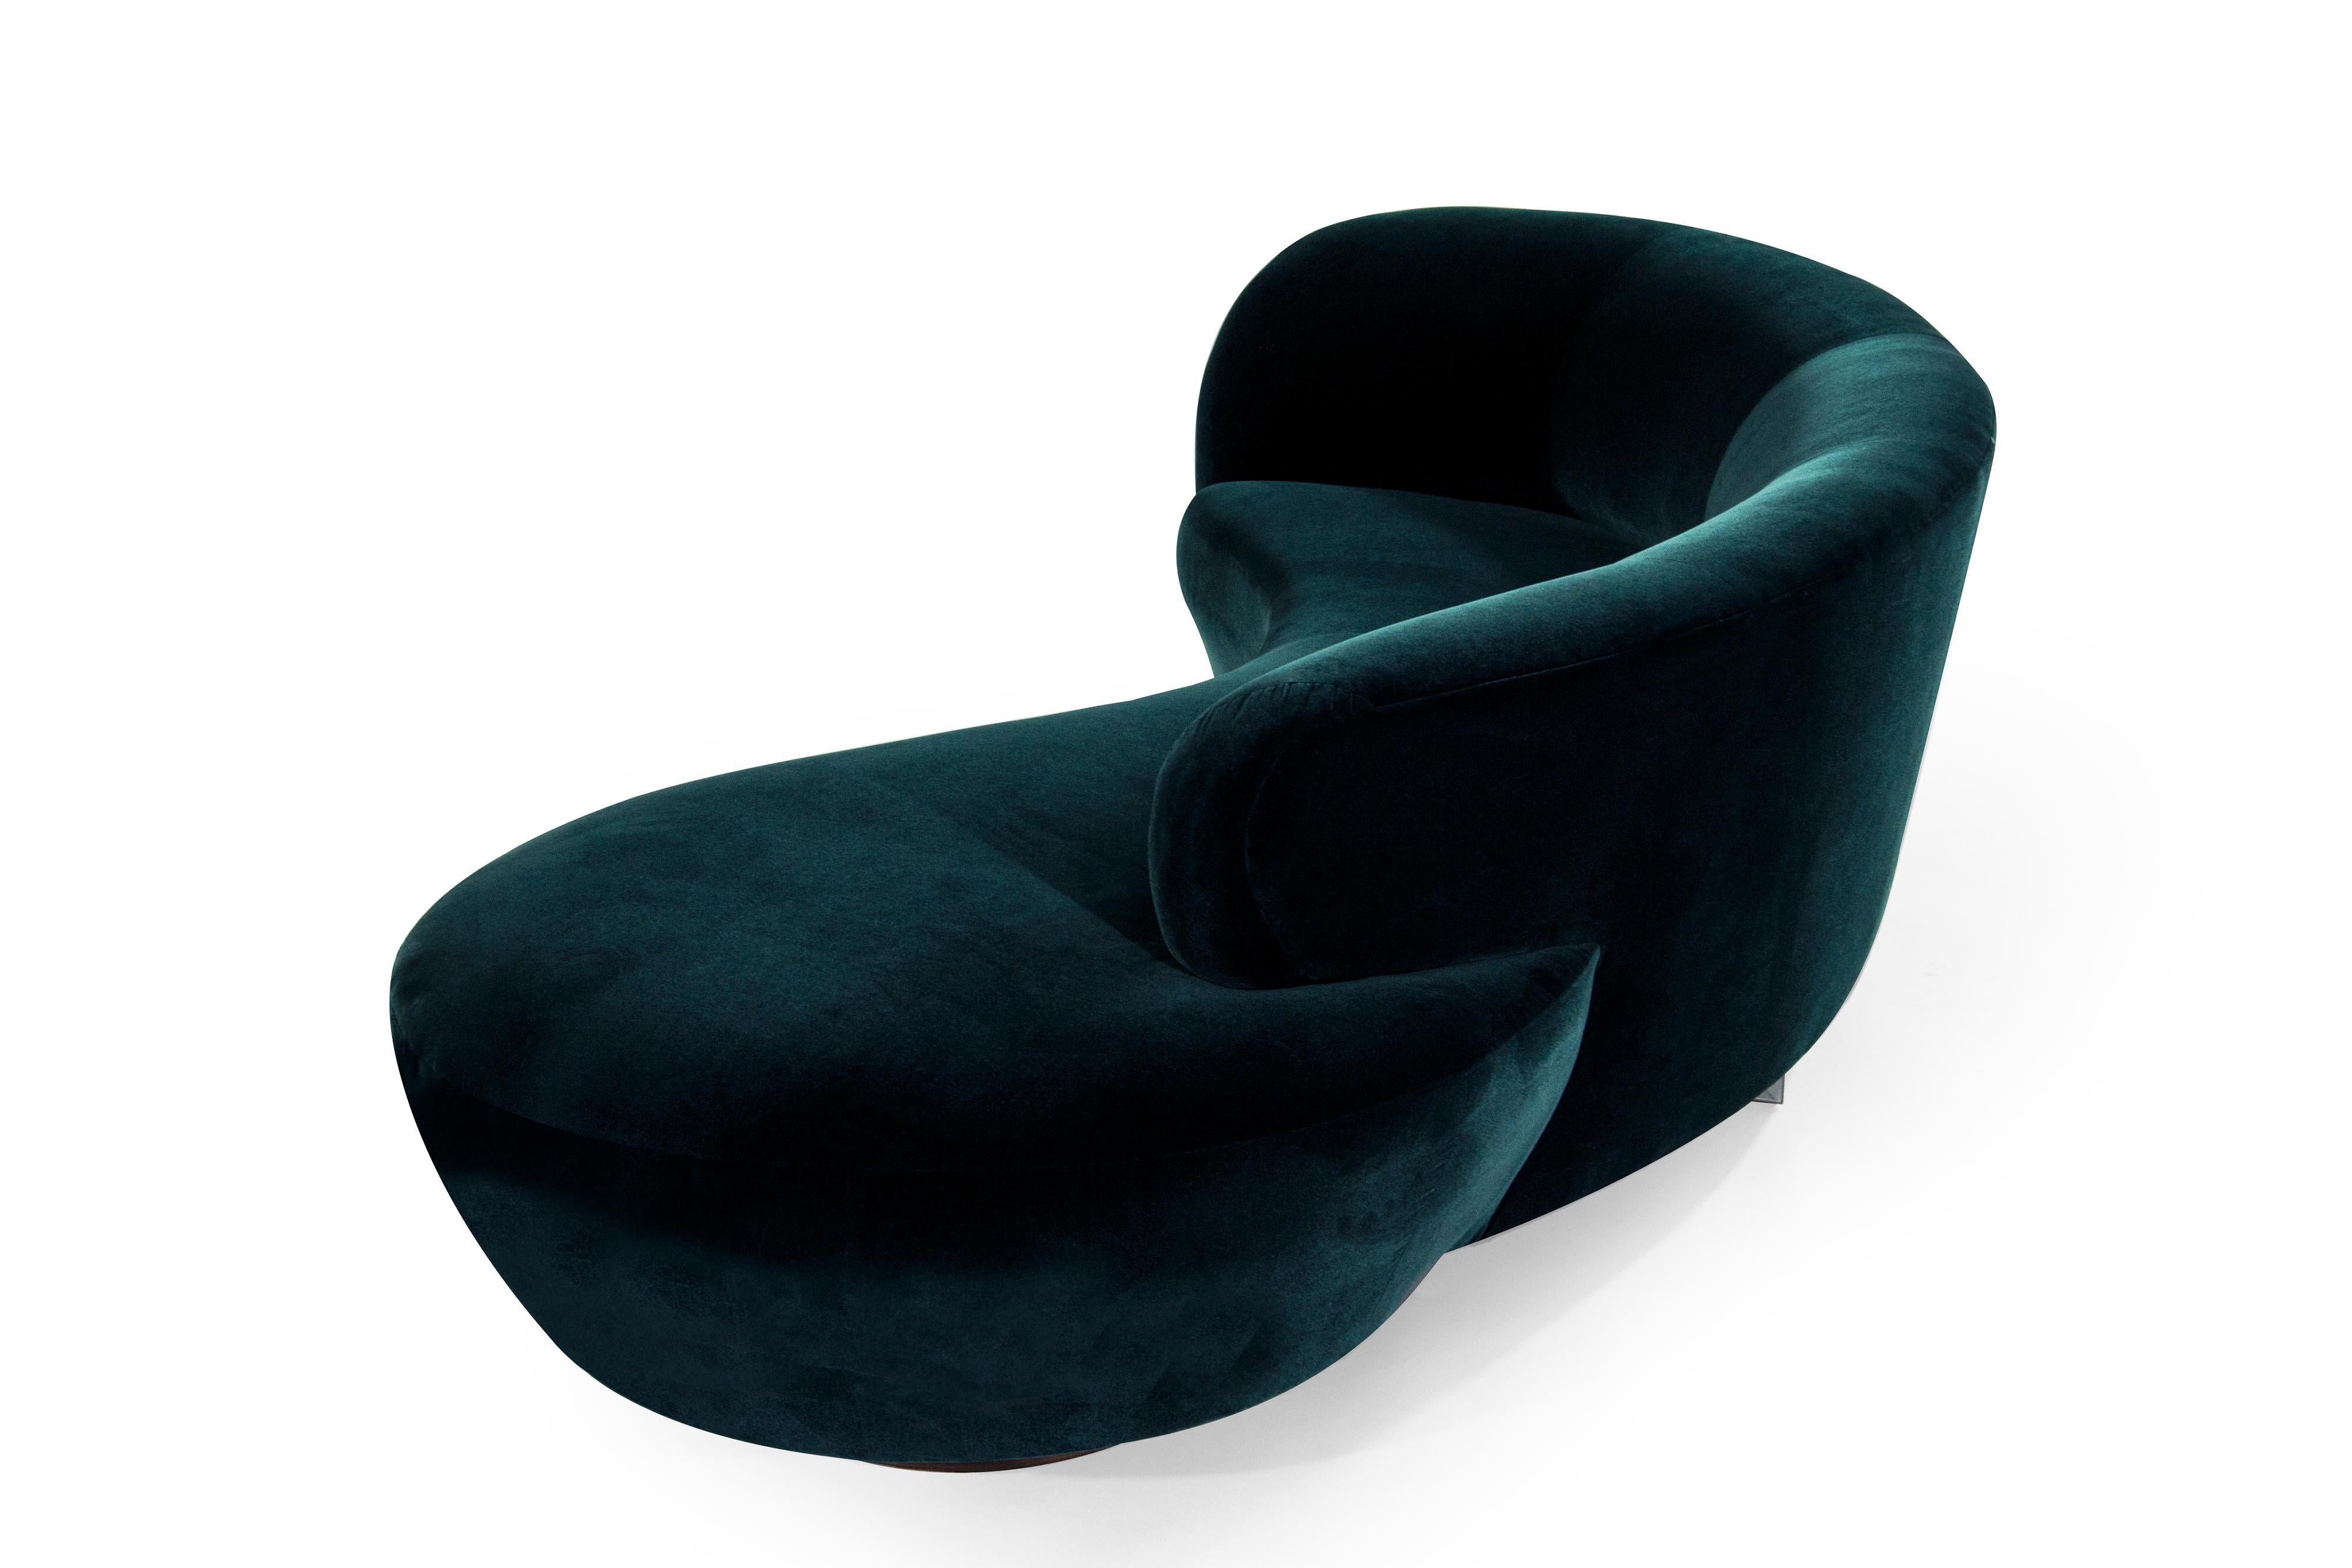 20th Century Curved Sofa in Teal Velvet by Vladimir Kagan